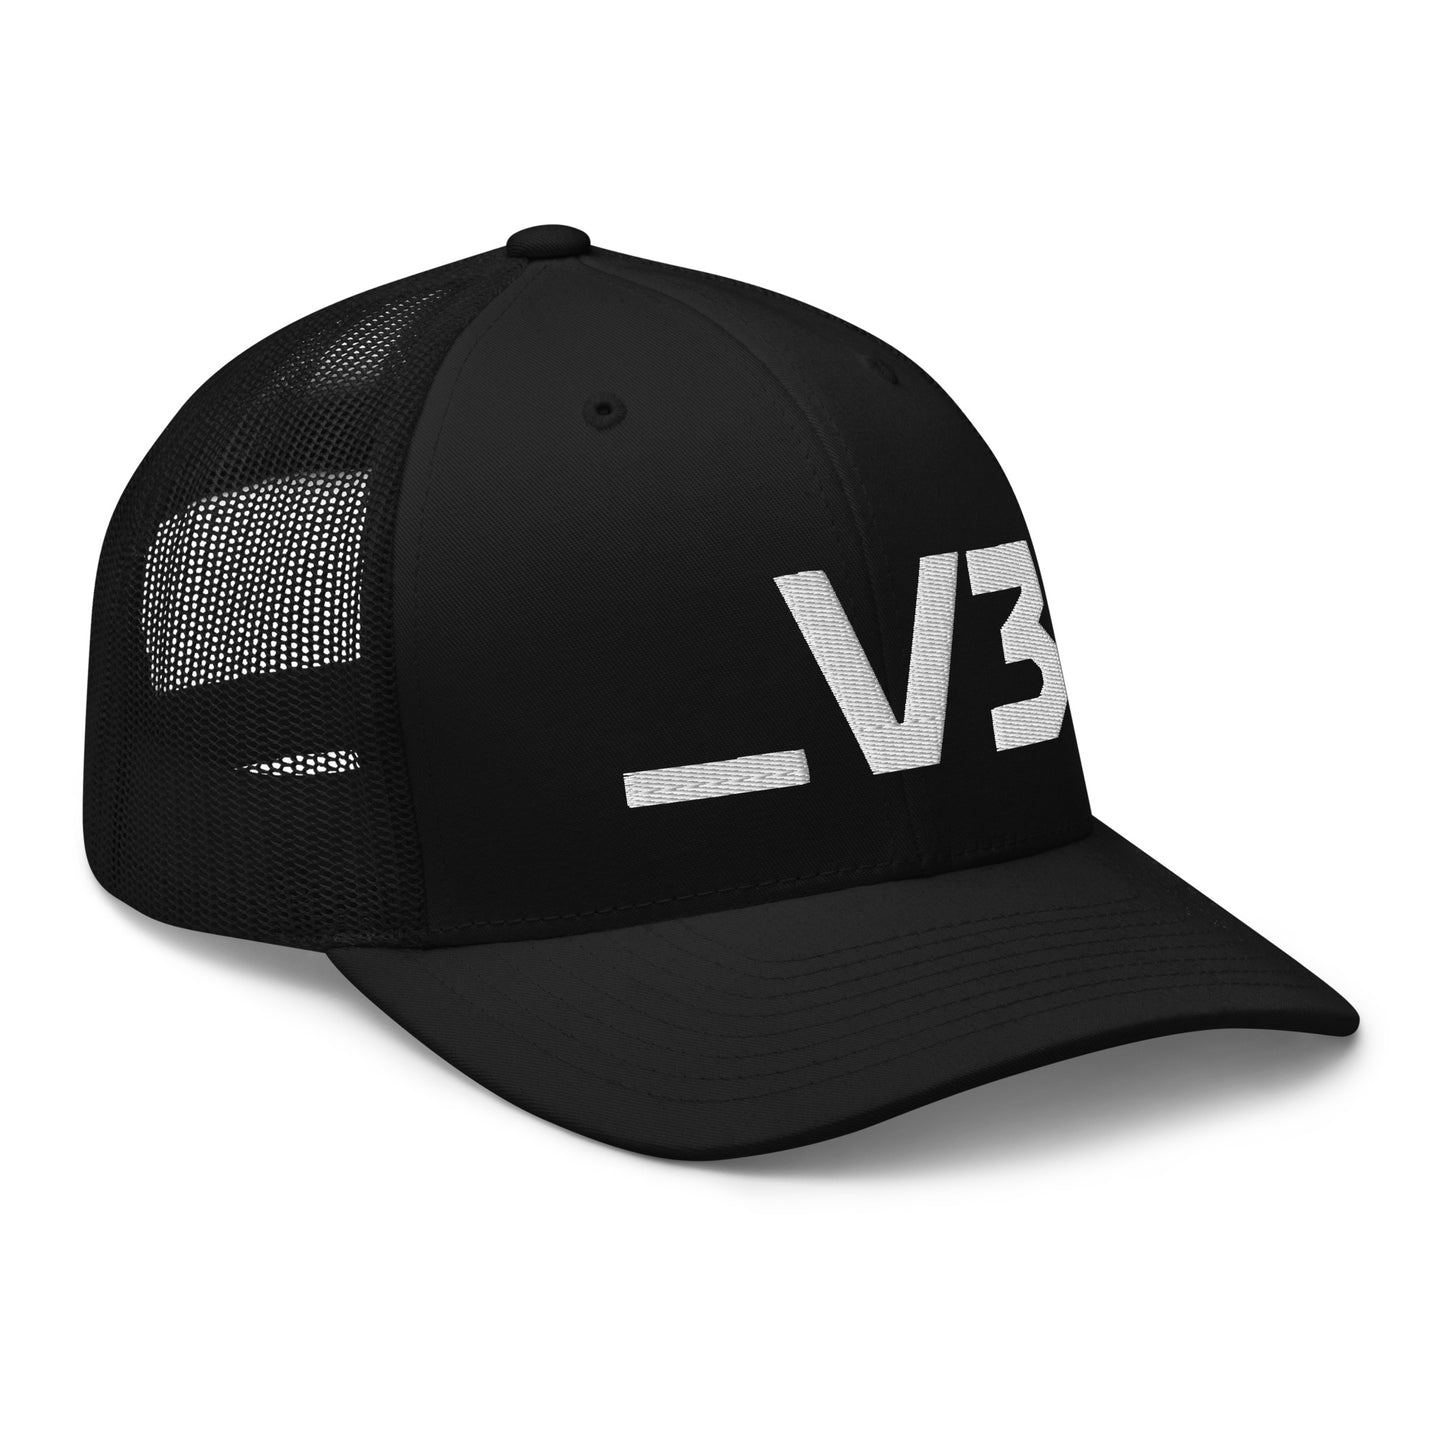 _V3 Embroidered Trucker Cap